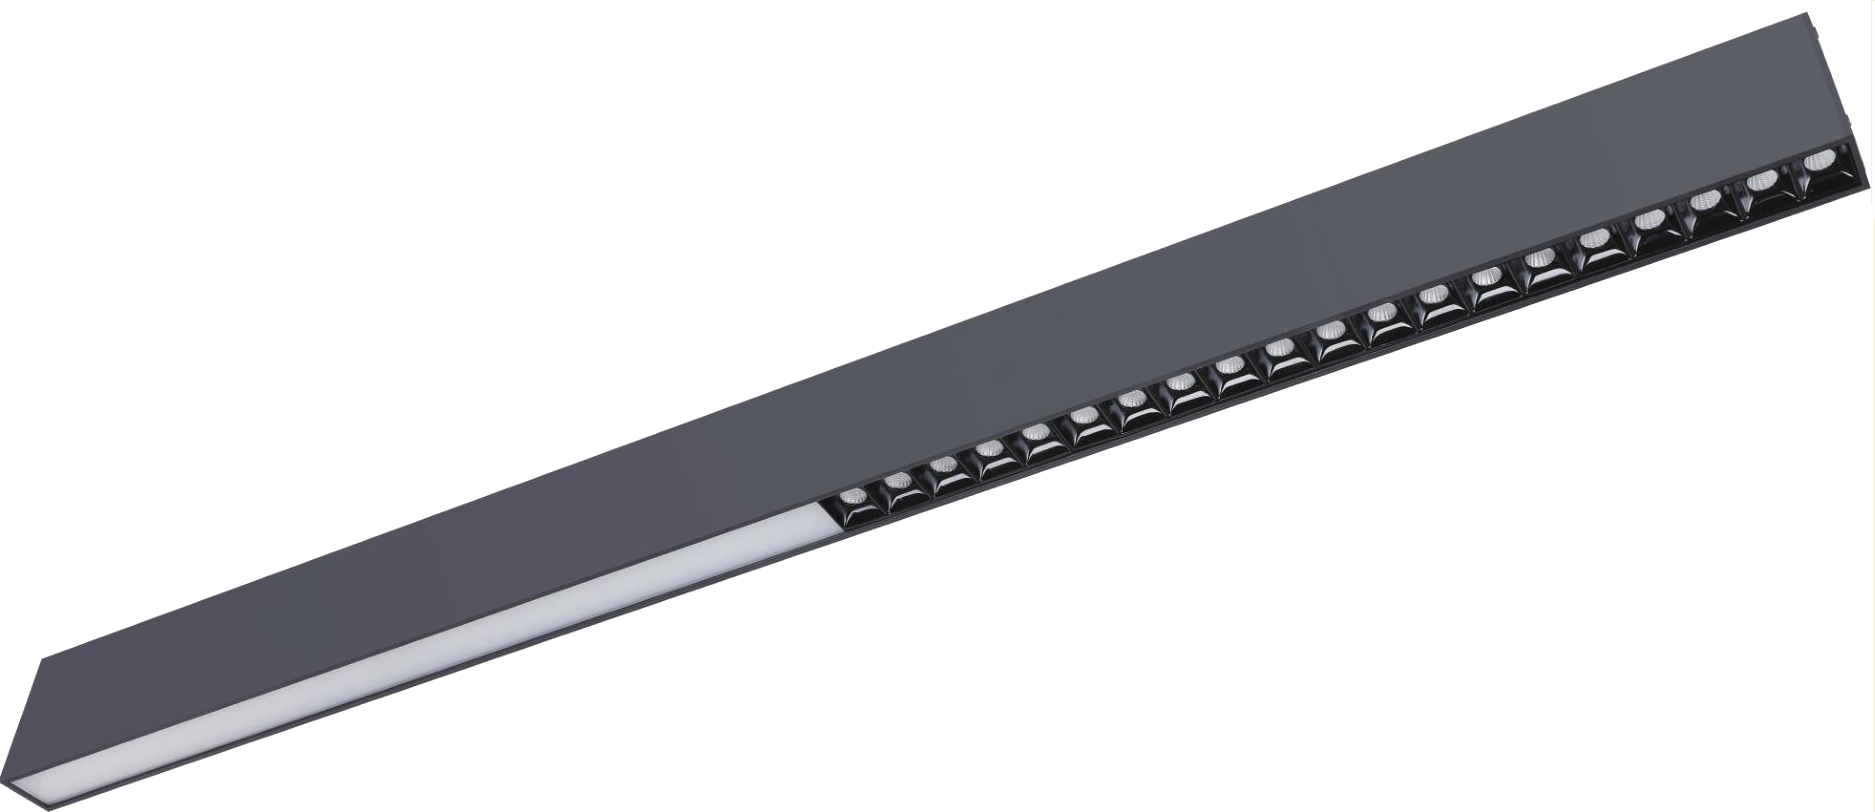 Led linear light linear light module